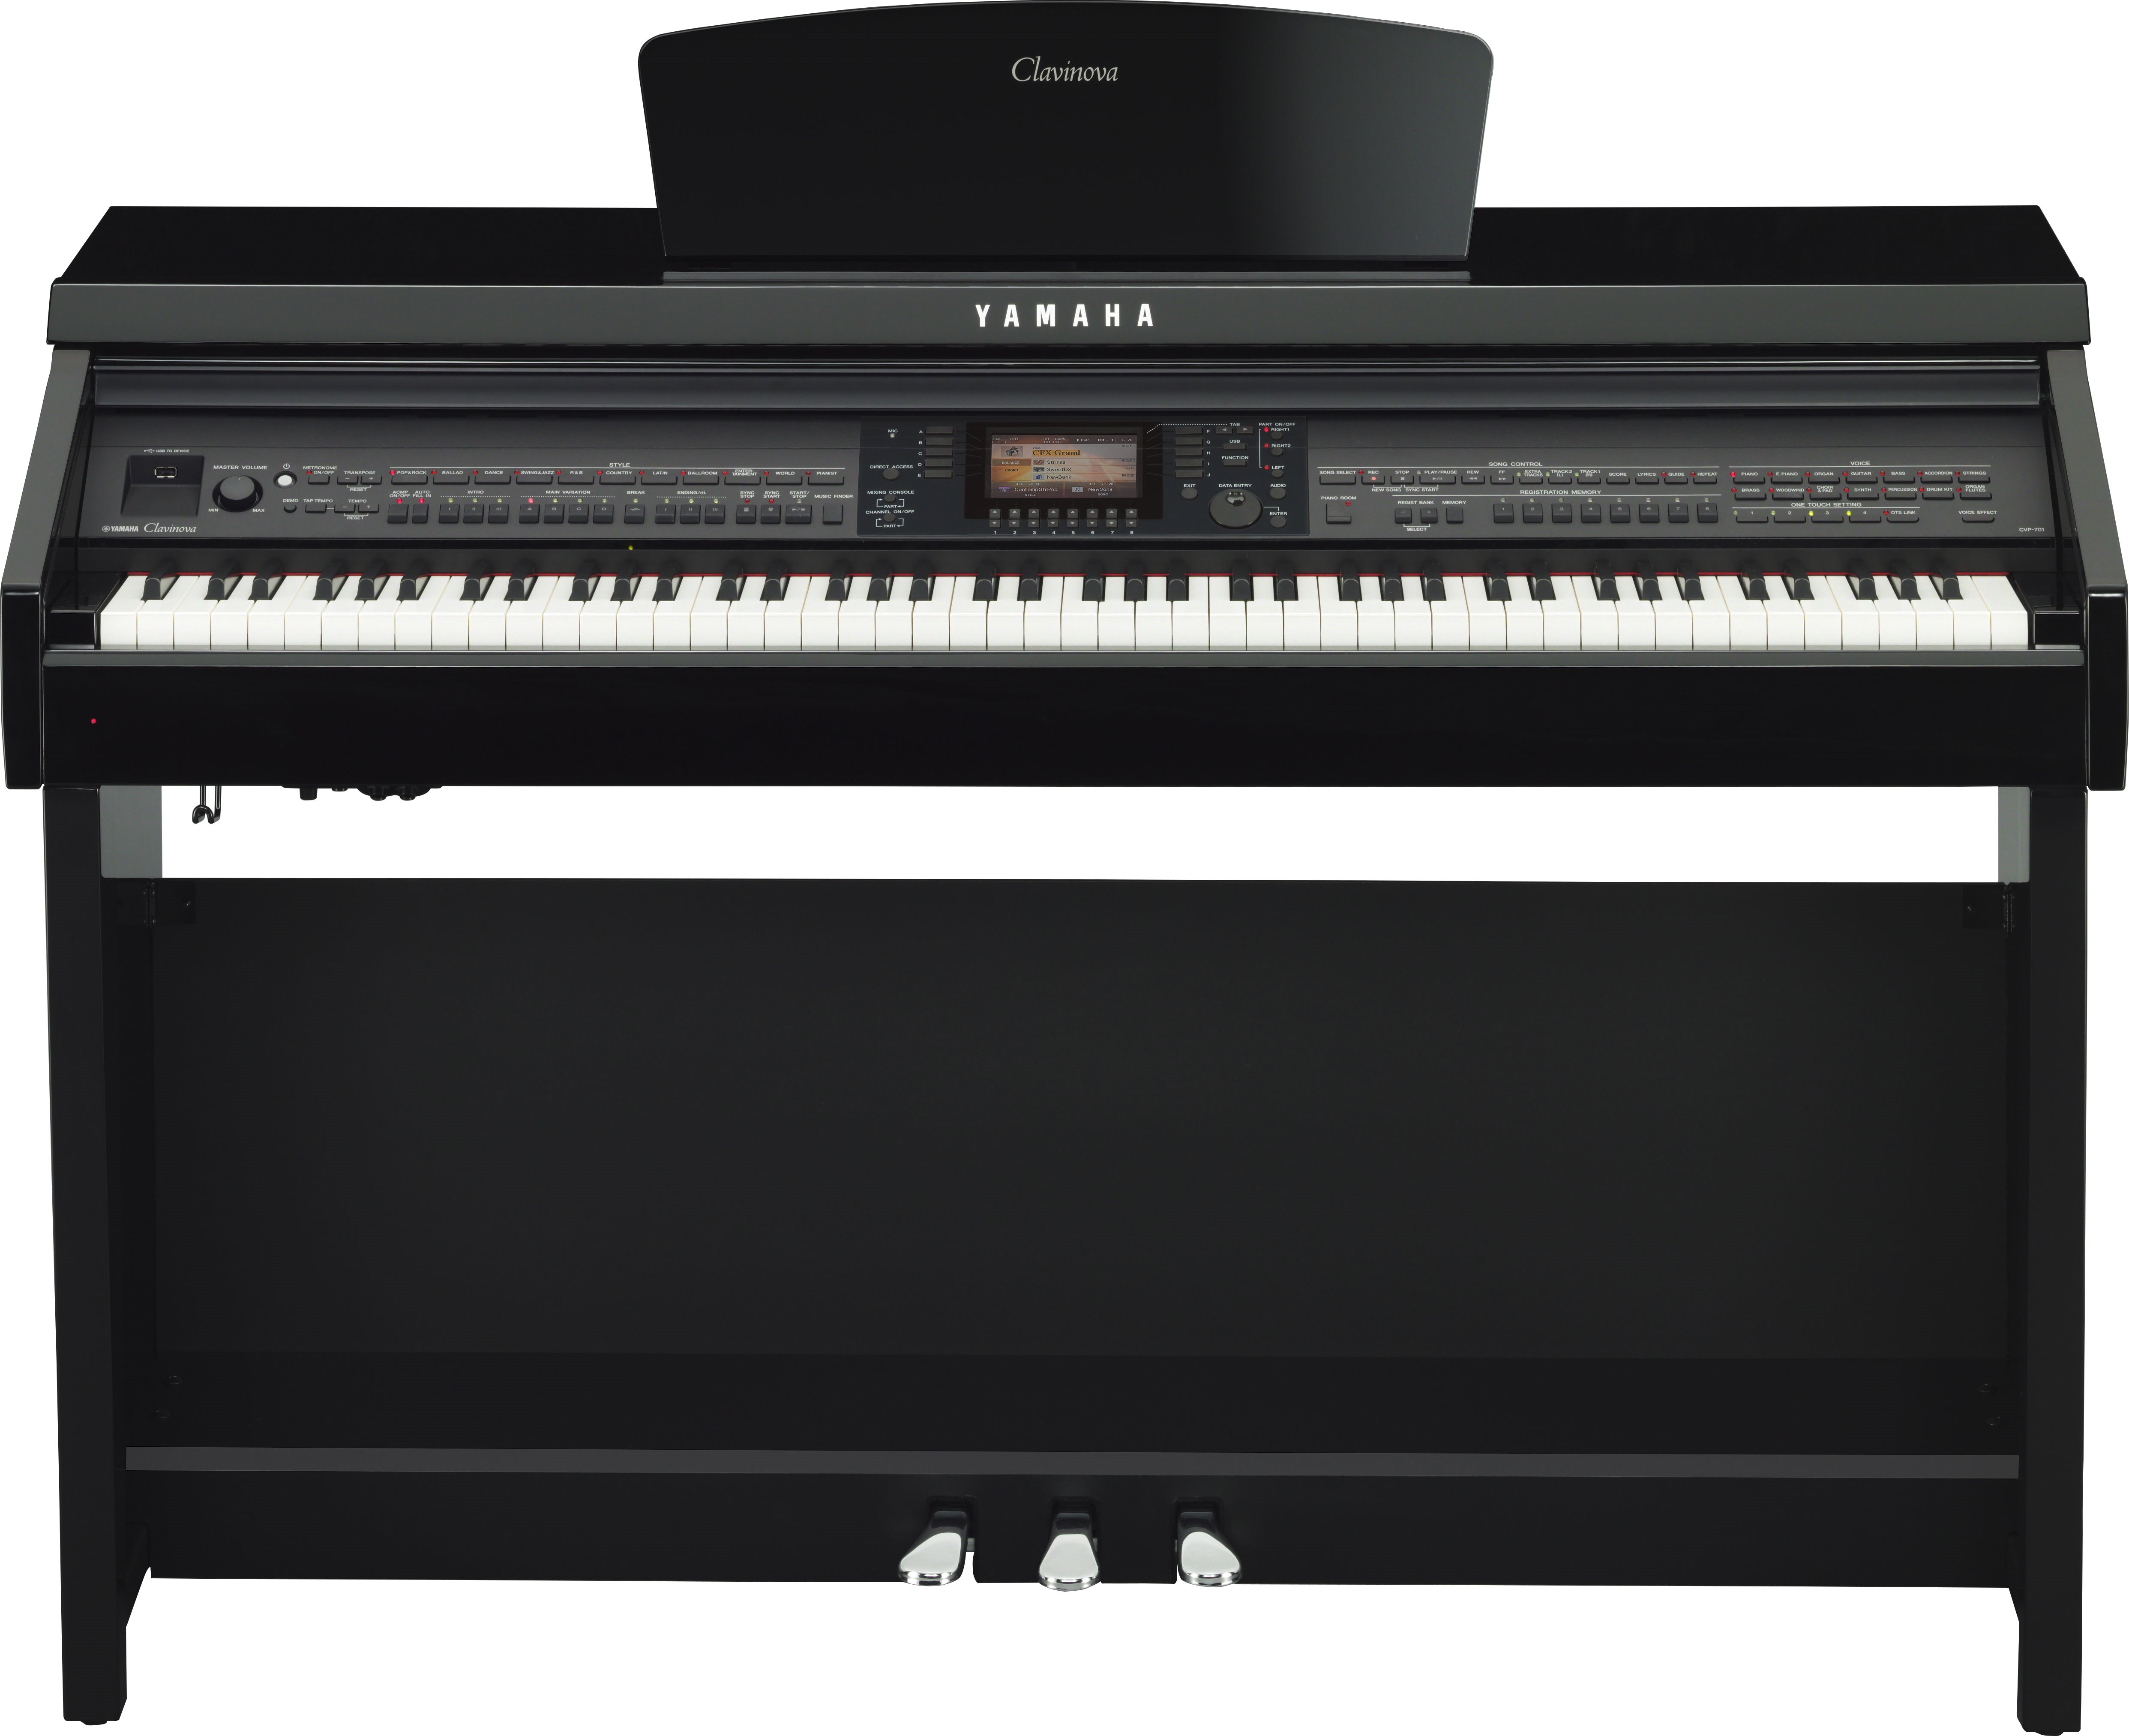 CVP-701 - Overview - Clavinova - Pianos - Musical Instruments - Products - Yamaha USA